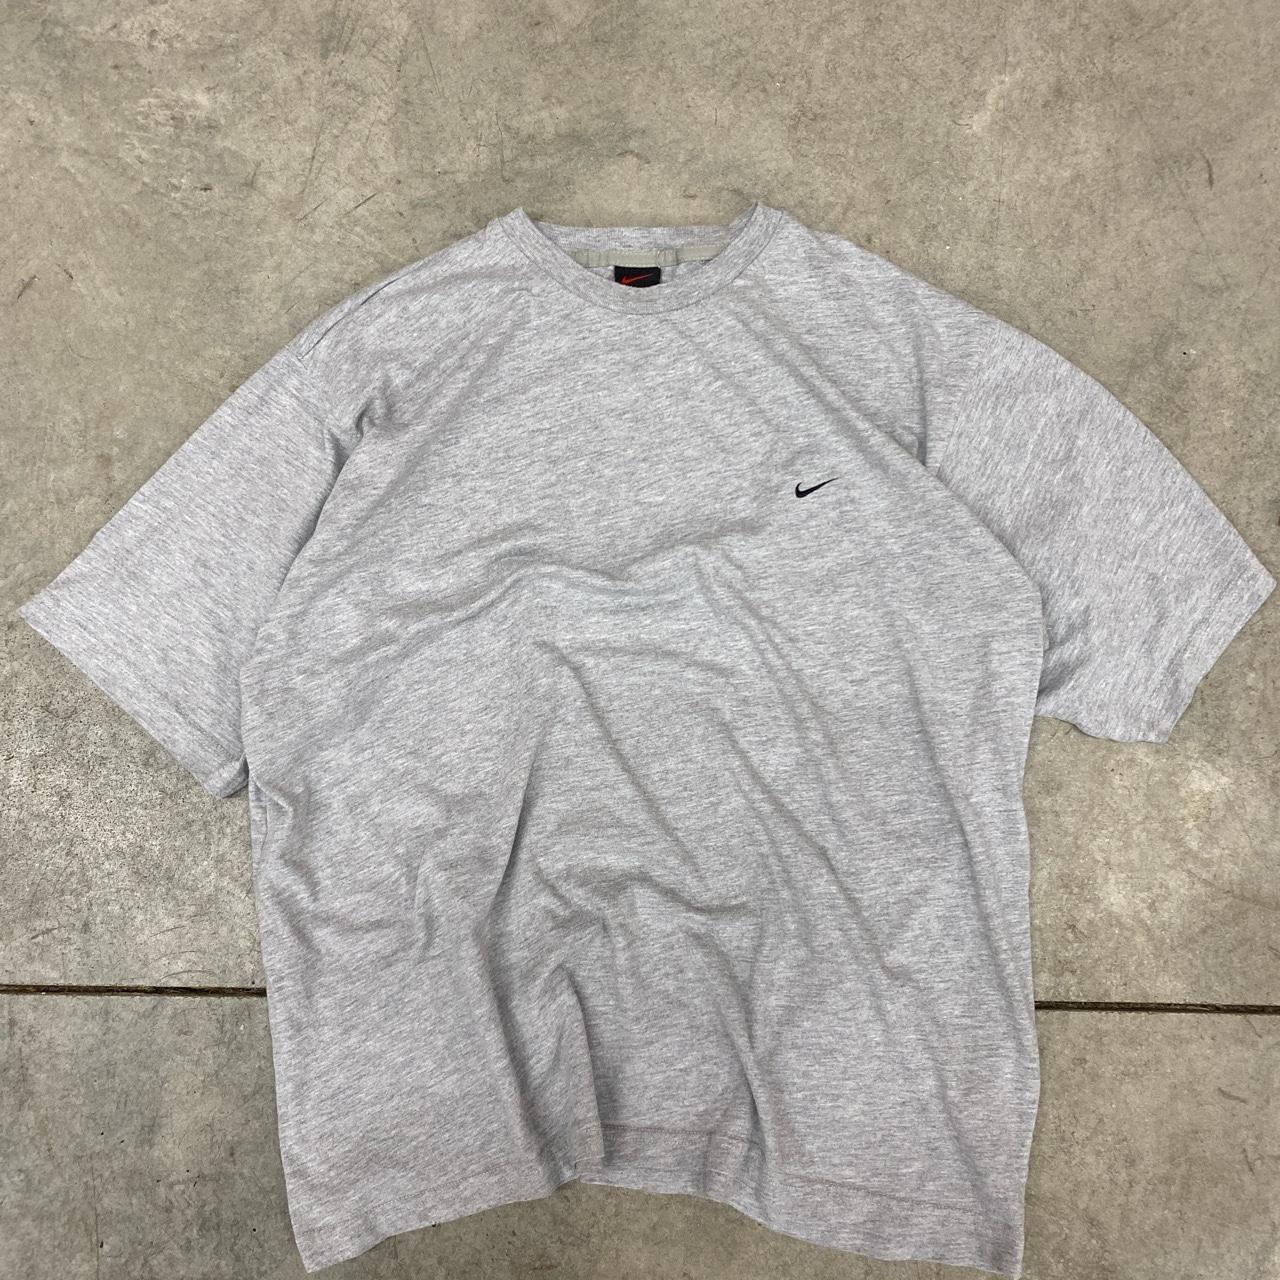 Vintage 90’s Grey Nike T-Shirt Condition:... - Depop